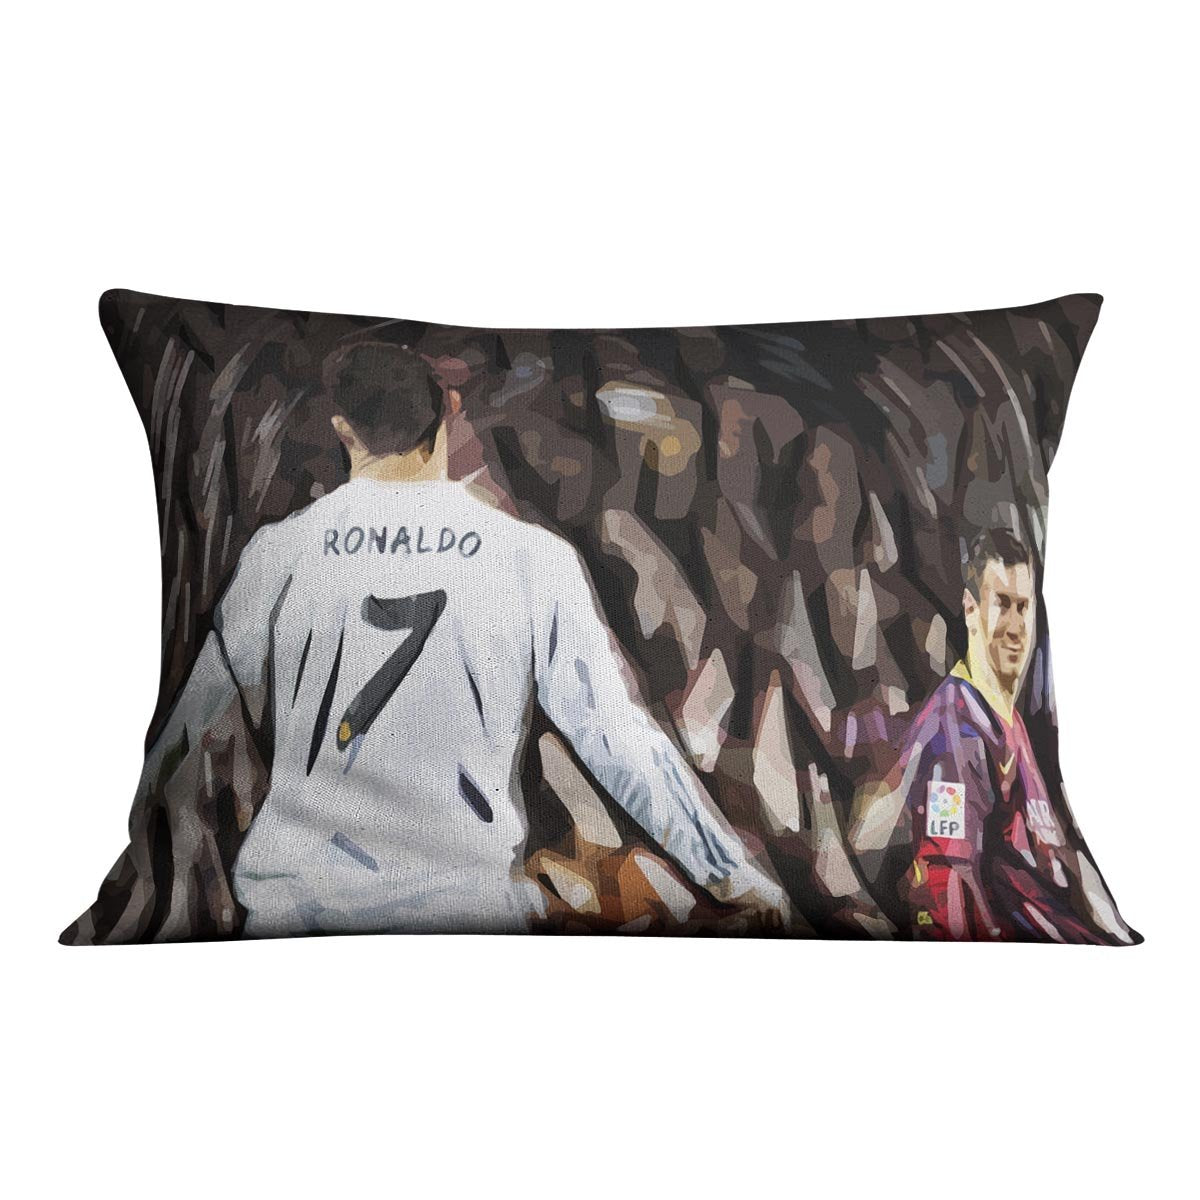 Ronaldo Vs Messi Cushion